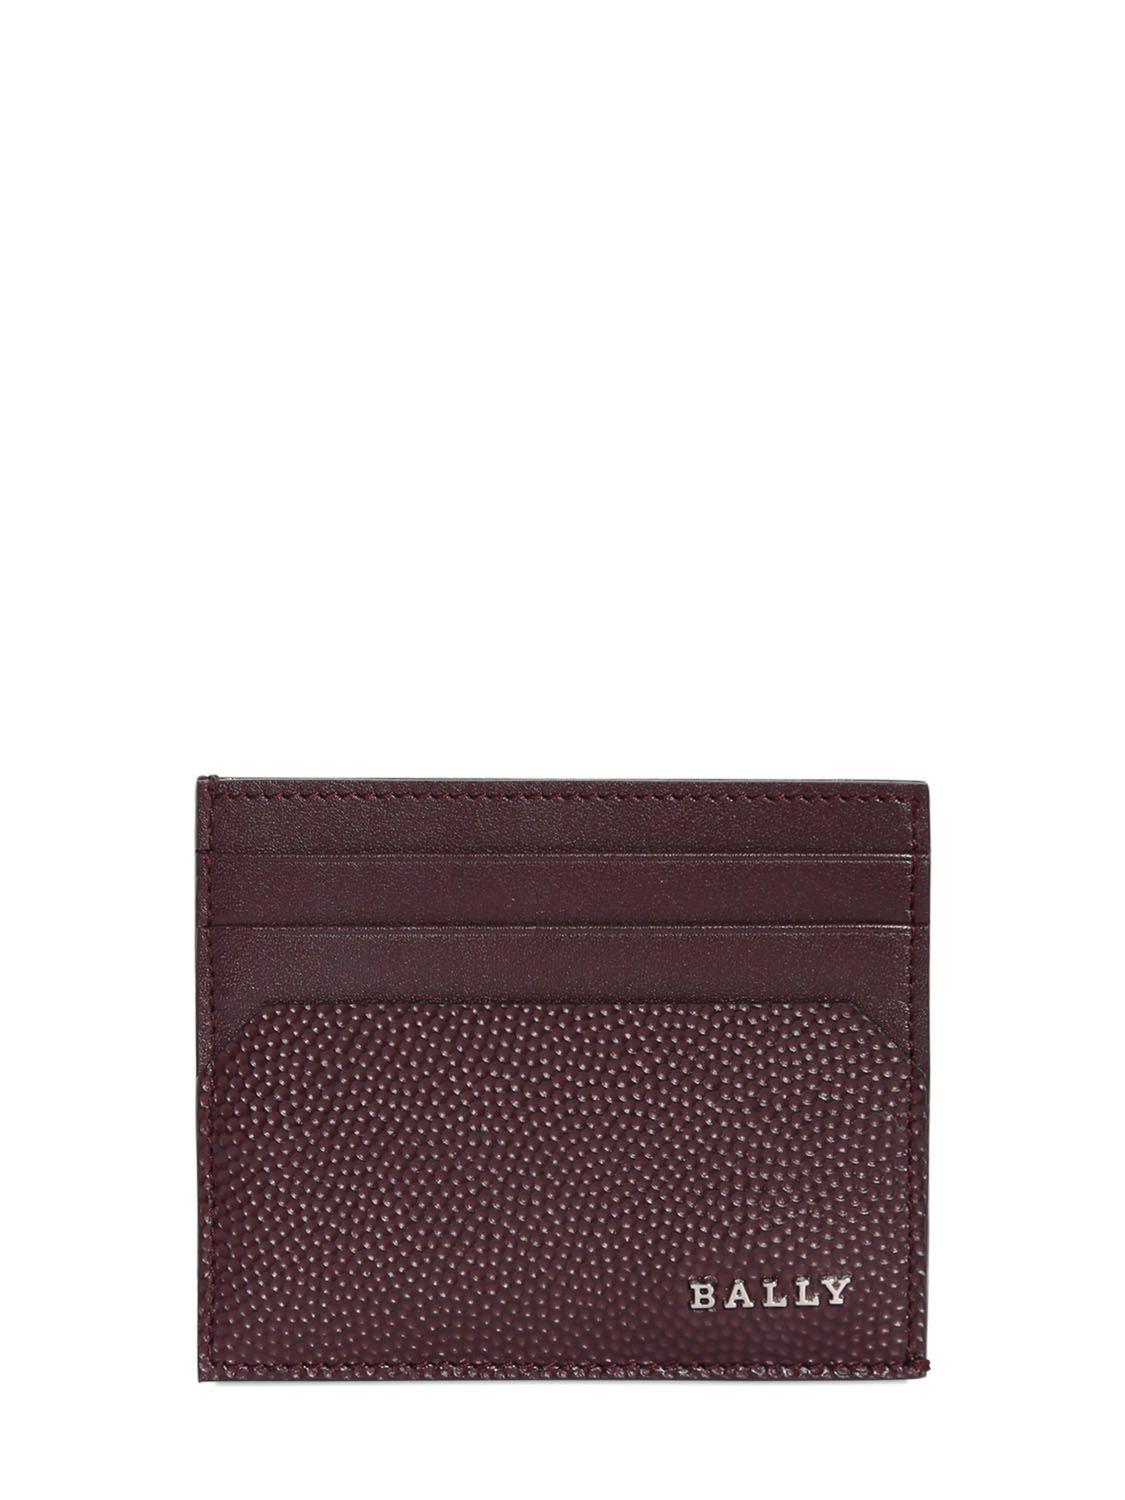 Bally Shoes Logo - bally logo detail leather card holder bordeaux men accessories,bally ...